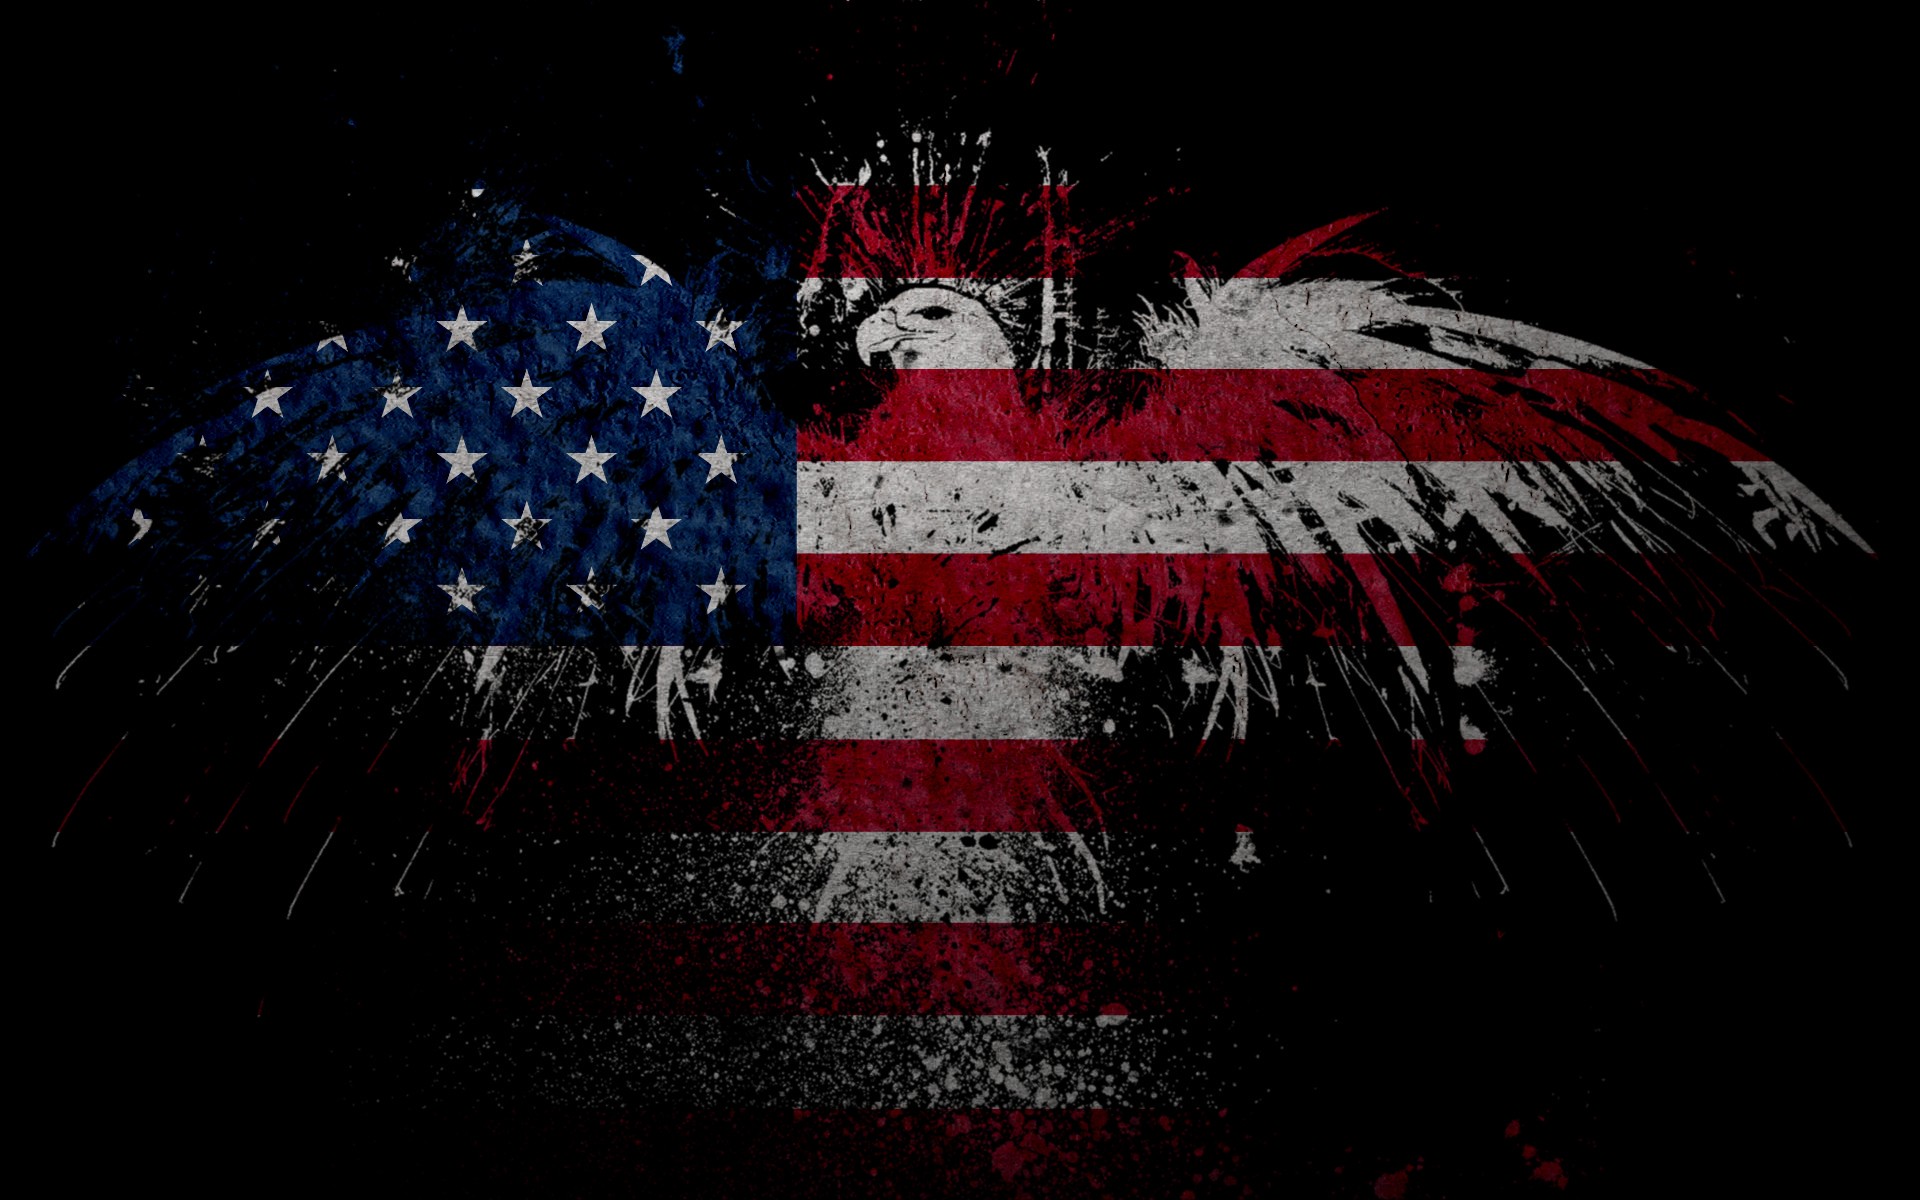 General 1920x1200 flag eagle USA grunge black background American flag digital art